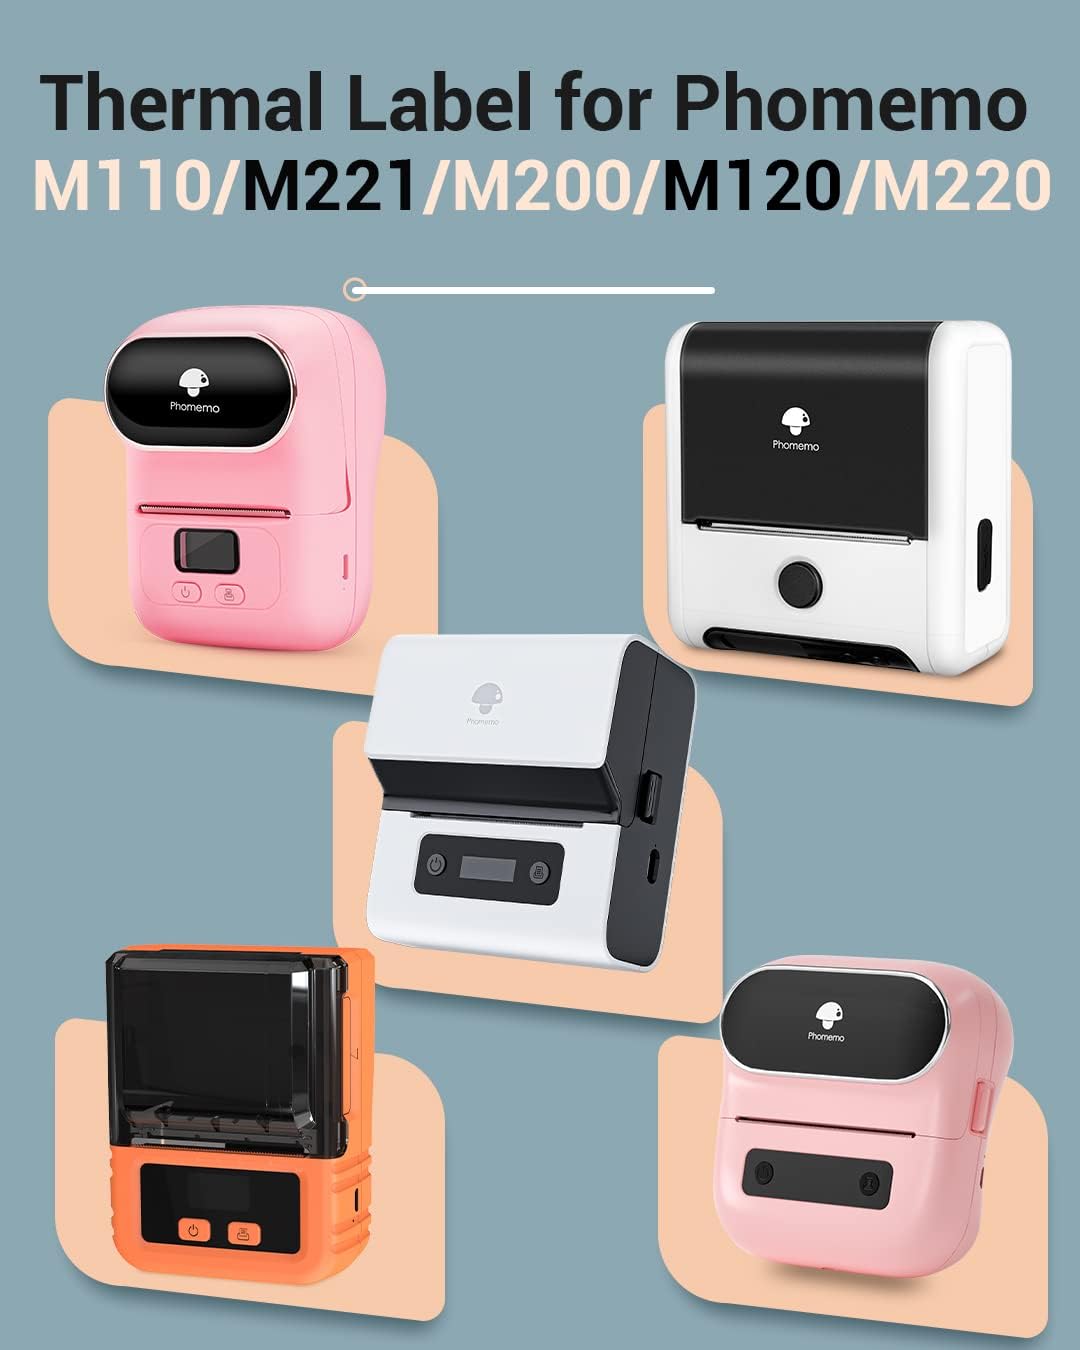 Phomemo Printer Labels 40x30mm/230Pcs Square/Purple